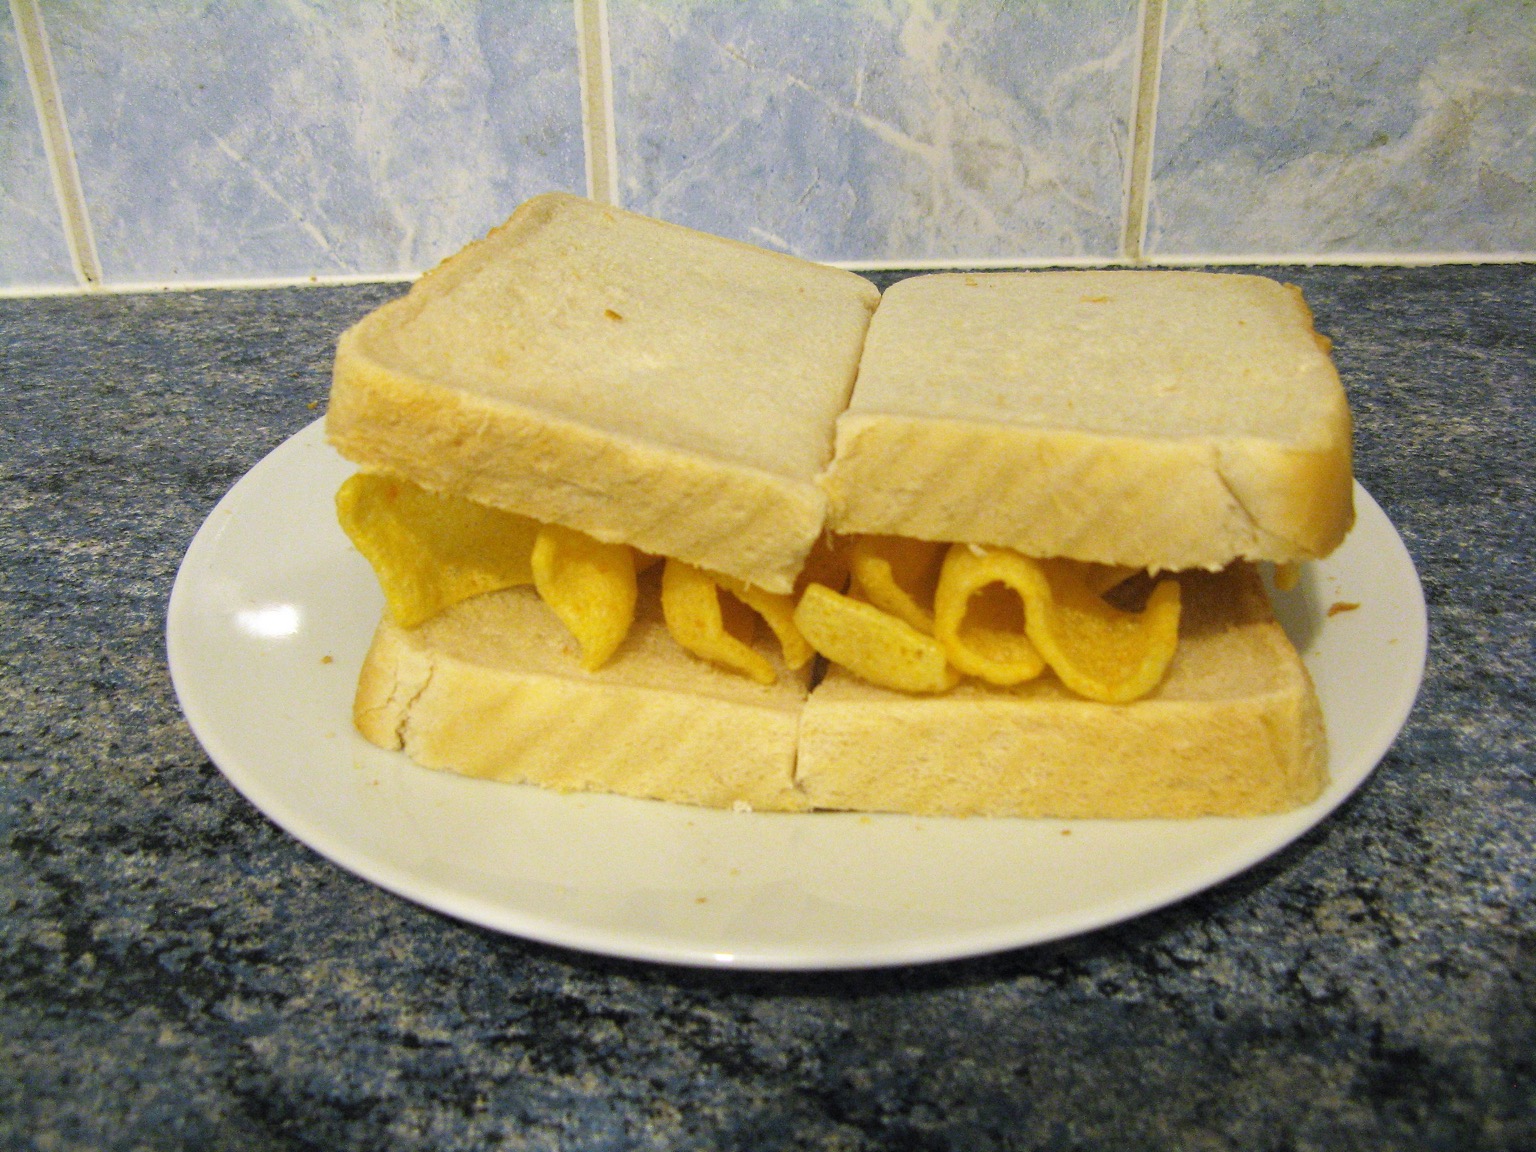 White Quaver sandwich sliced in two